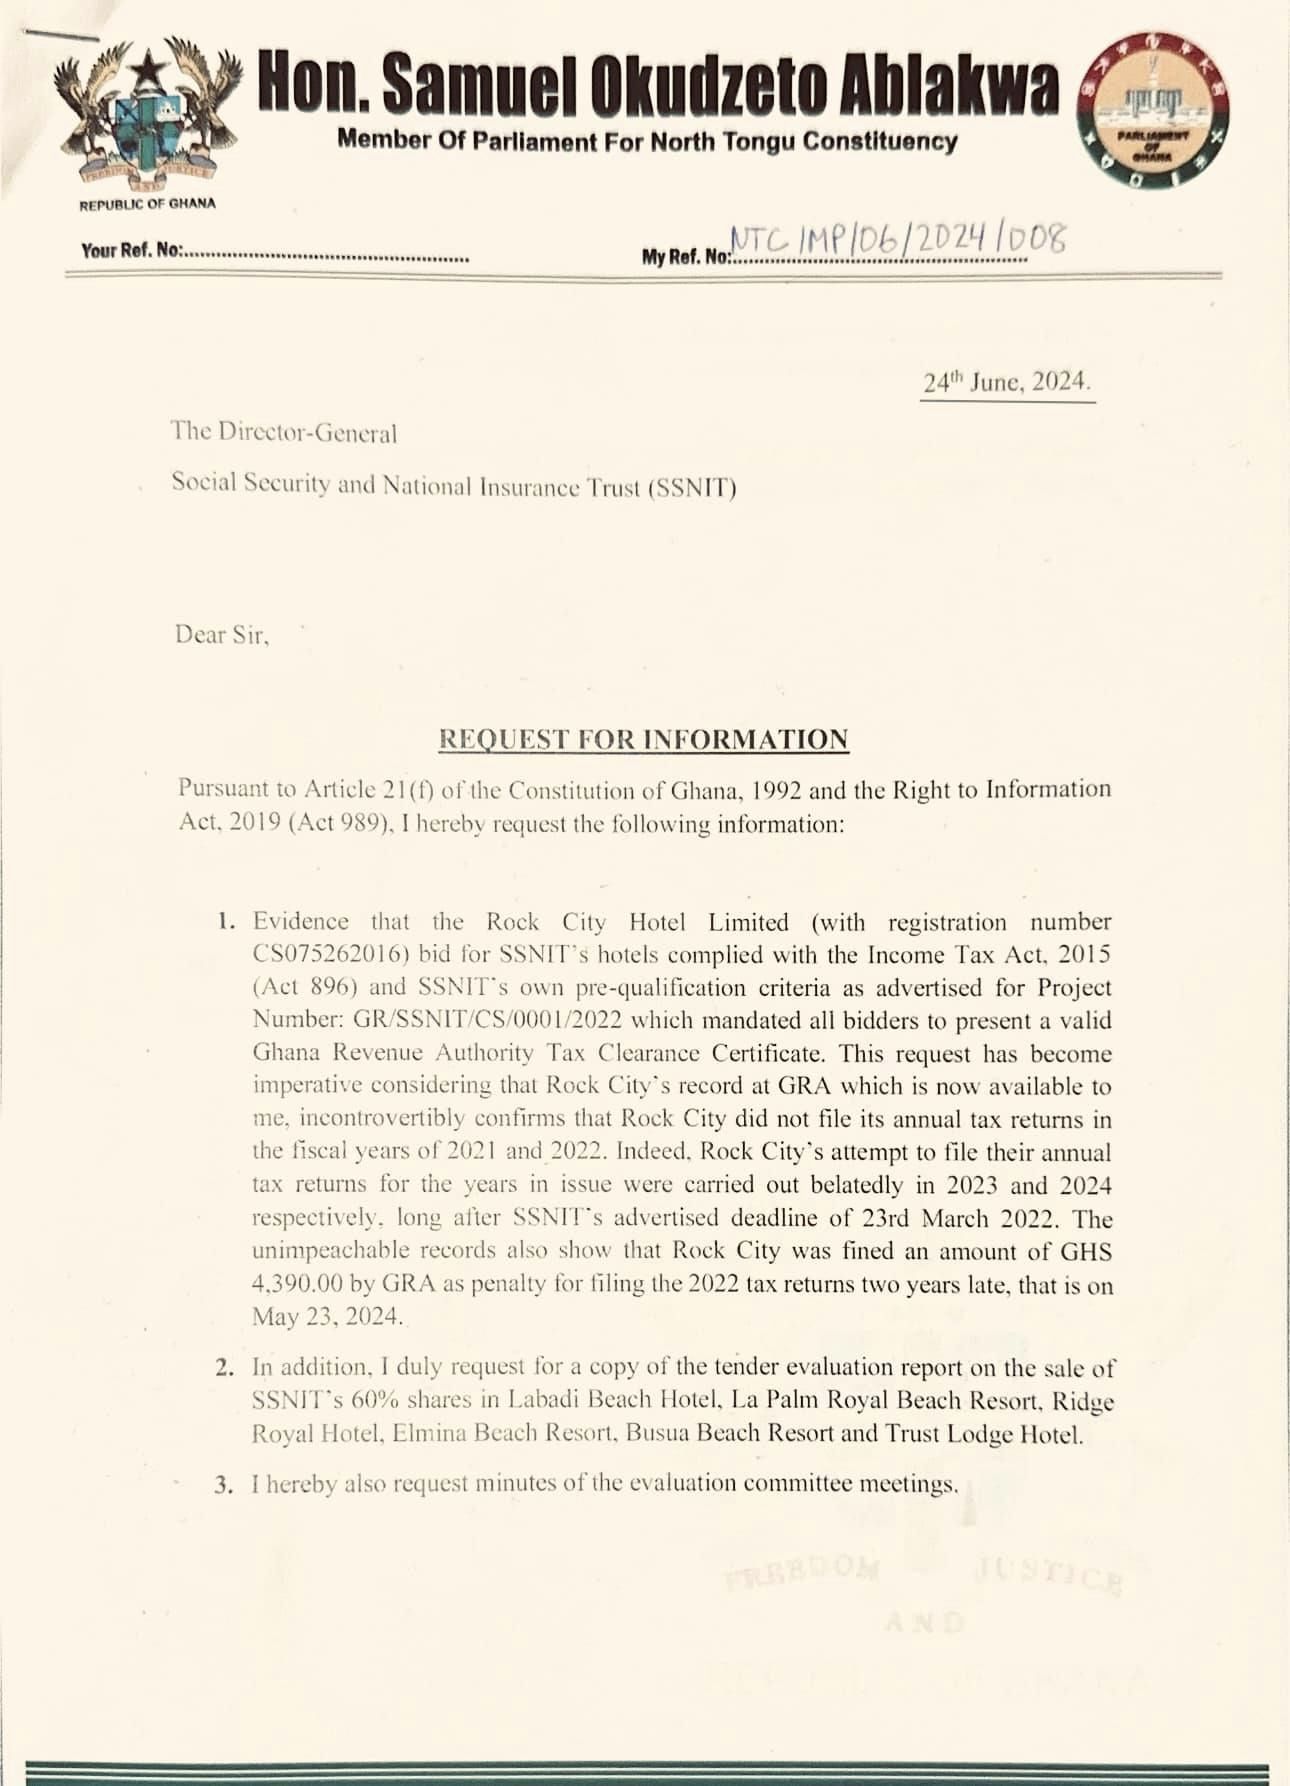 SSNIT hotels: Ablakwa files RTI request demanding Rock City’s GRA tax clearance certificate